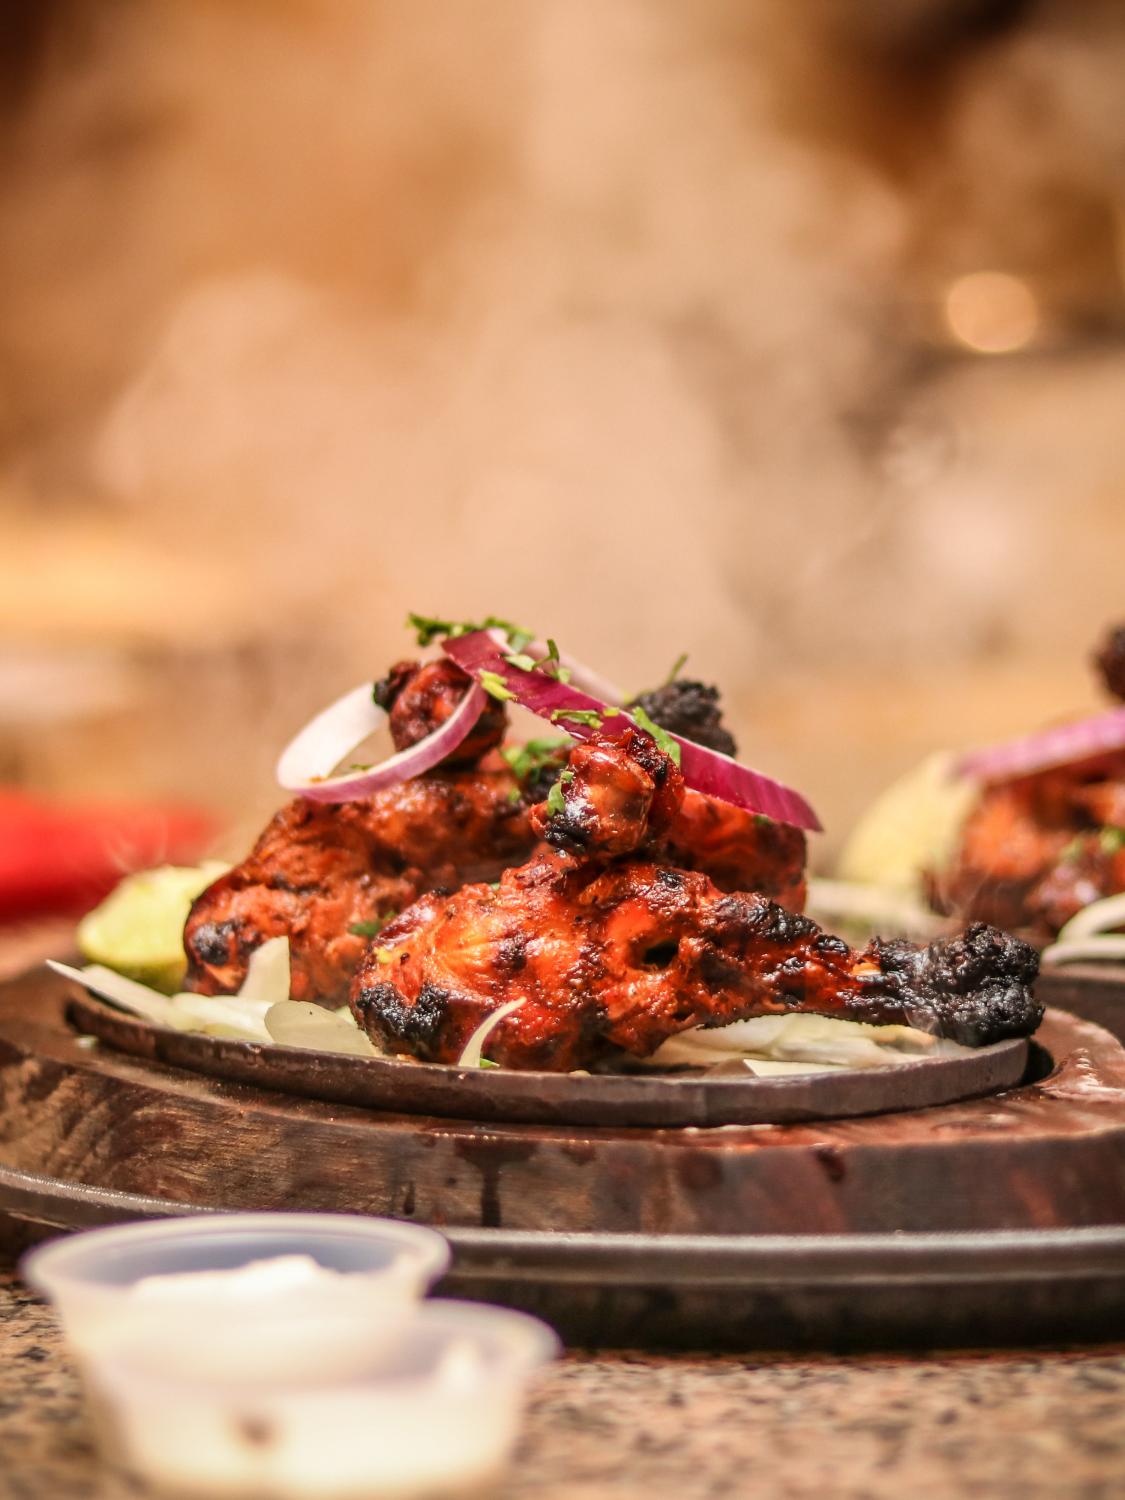 Indian Food - Chicken Kebab at Palamuru Grill in Santa Clara, Calif.,...